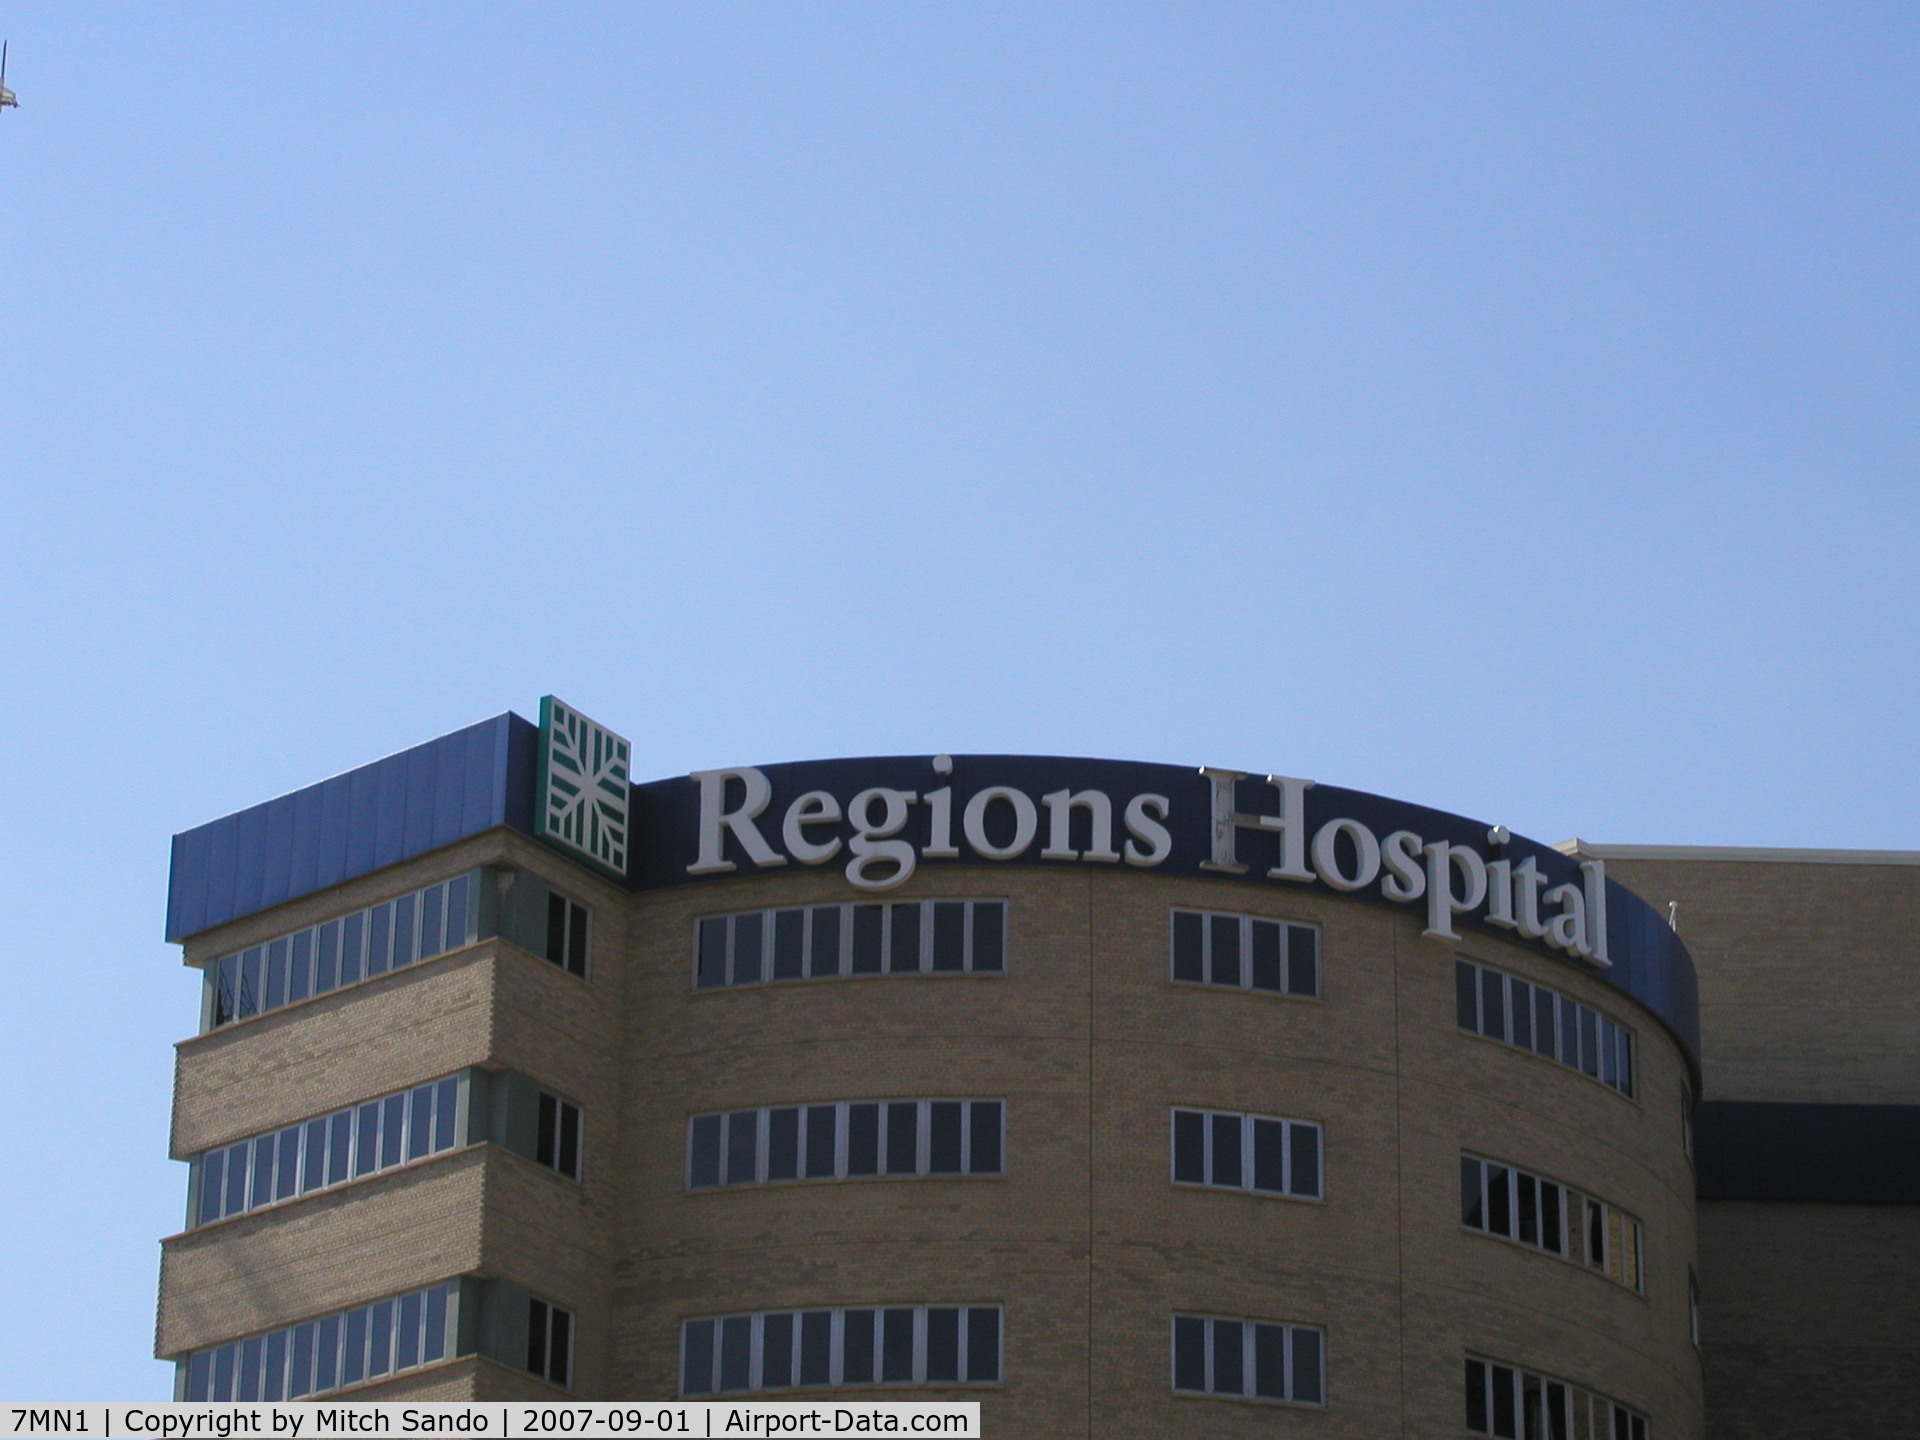 Regions Hospital Heliport (7MN1) - Region's Hospital in Downtown St. Paul, a Level I Trauma Center.